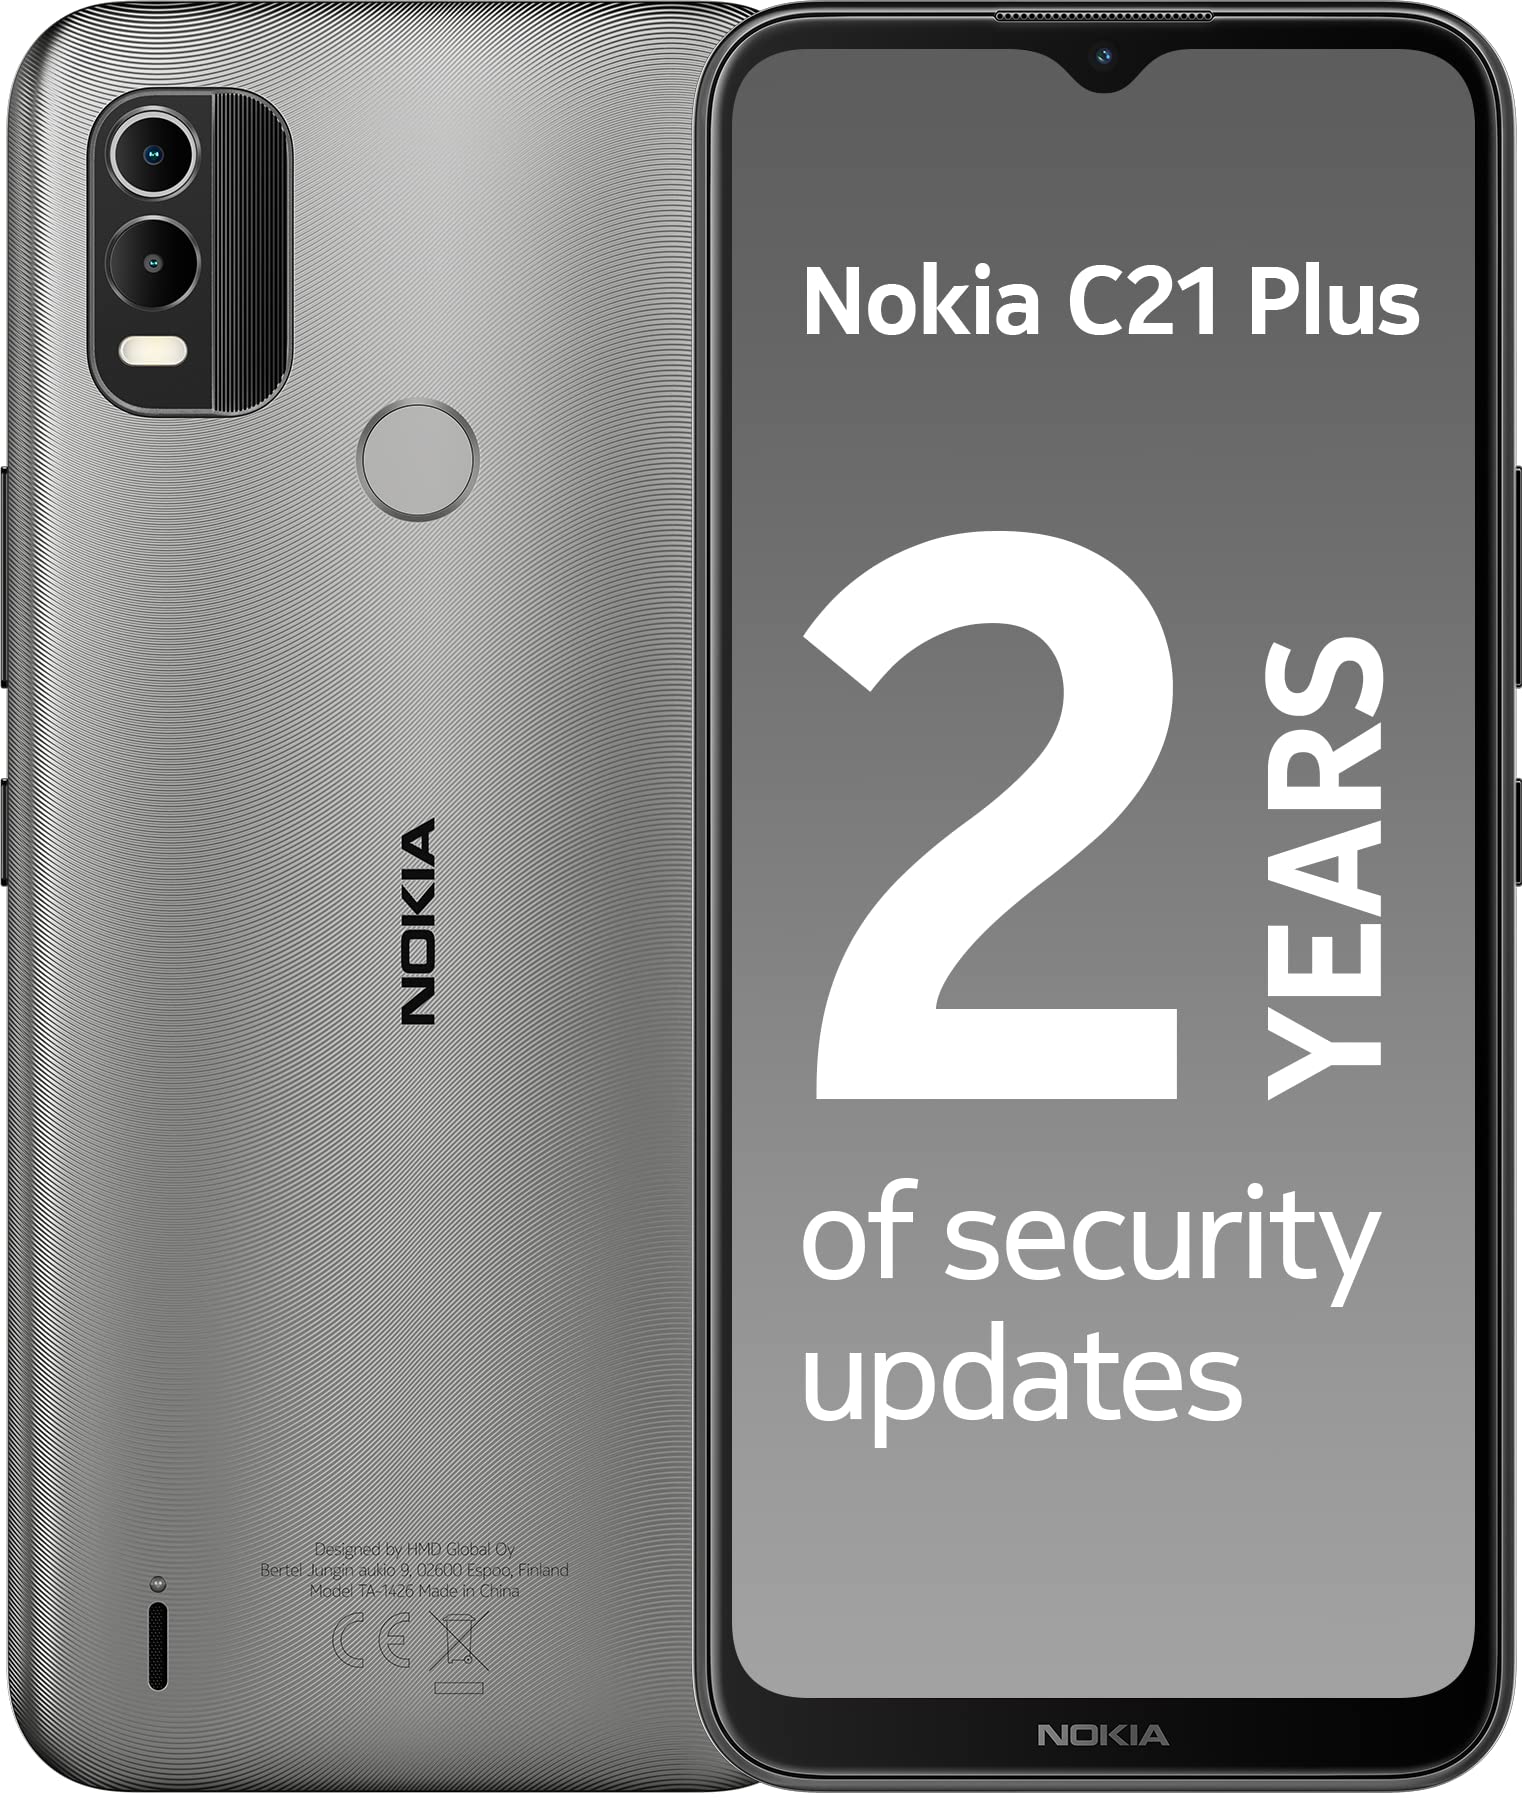 Nokia c21 Plus Dual-Sim 32gB ROM + 2gB RAM (gSM OnlyNo cDMA) Factory Unlocked 4gLTE Smartphone (Warm gray) - International Versi